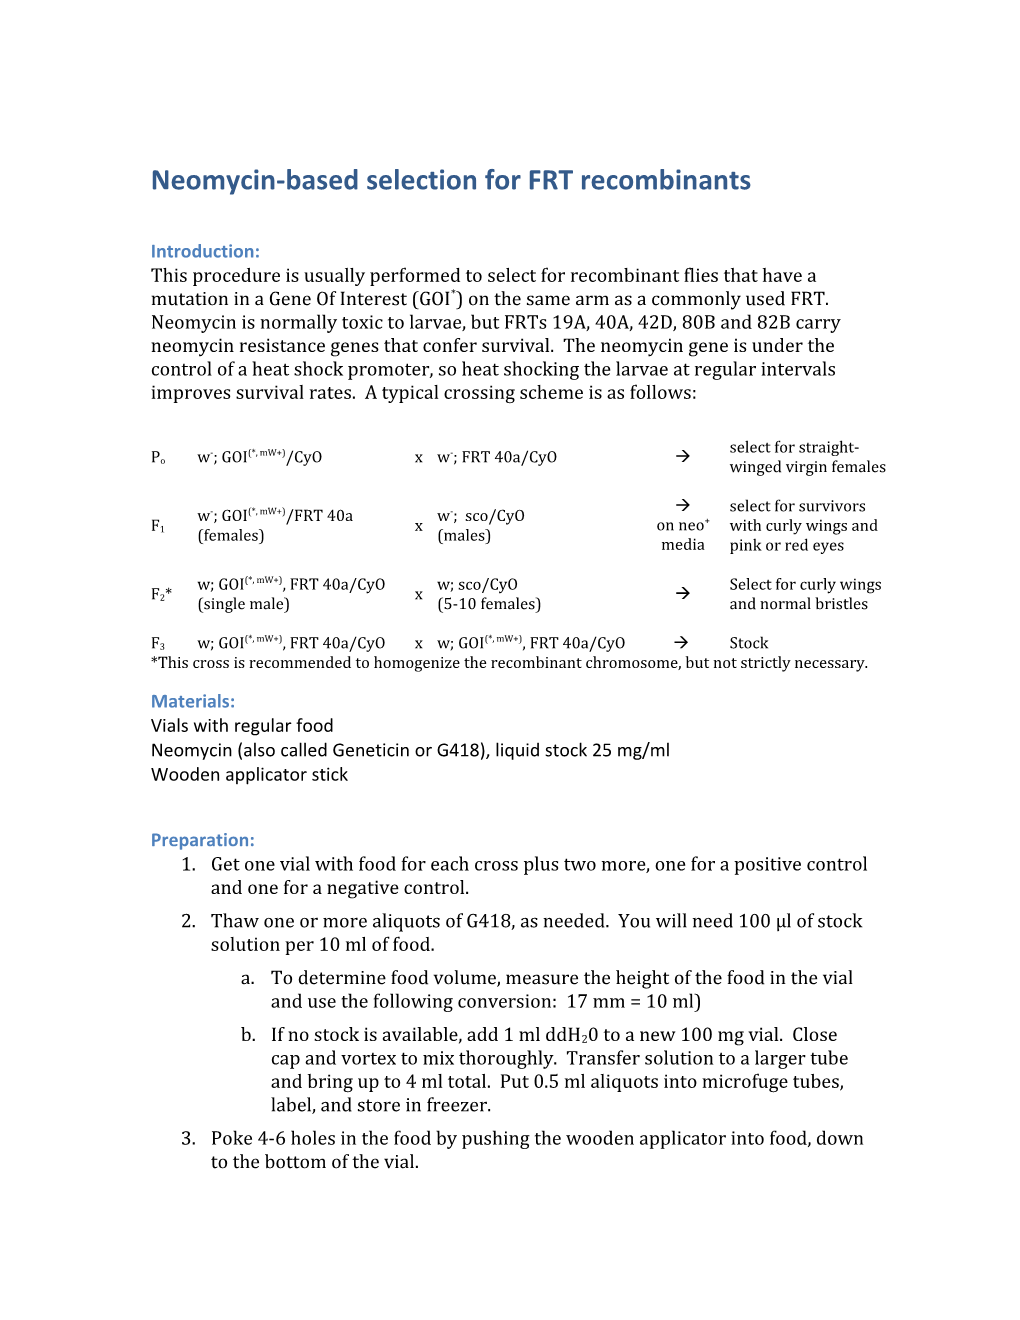 Neomycin-Based Selection for FRT Recombinants